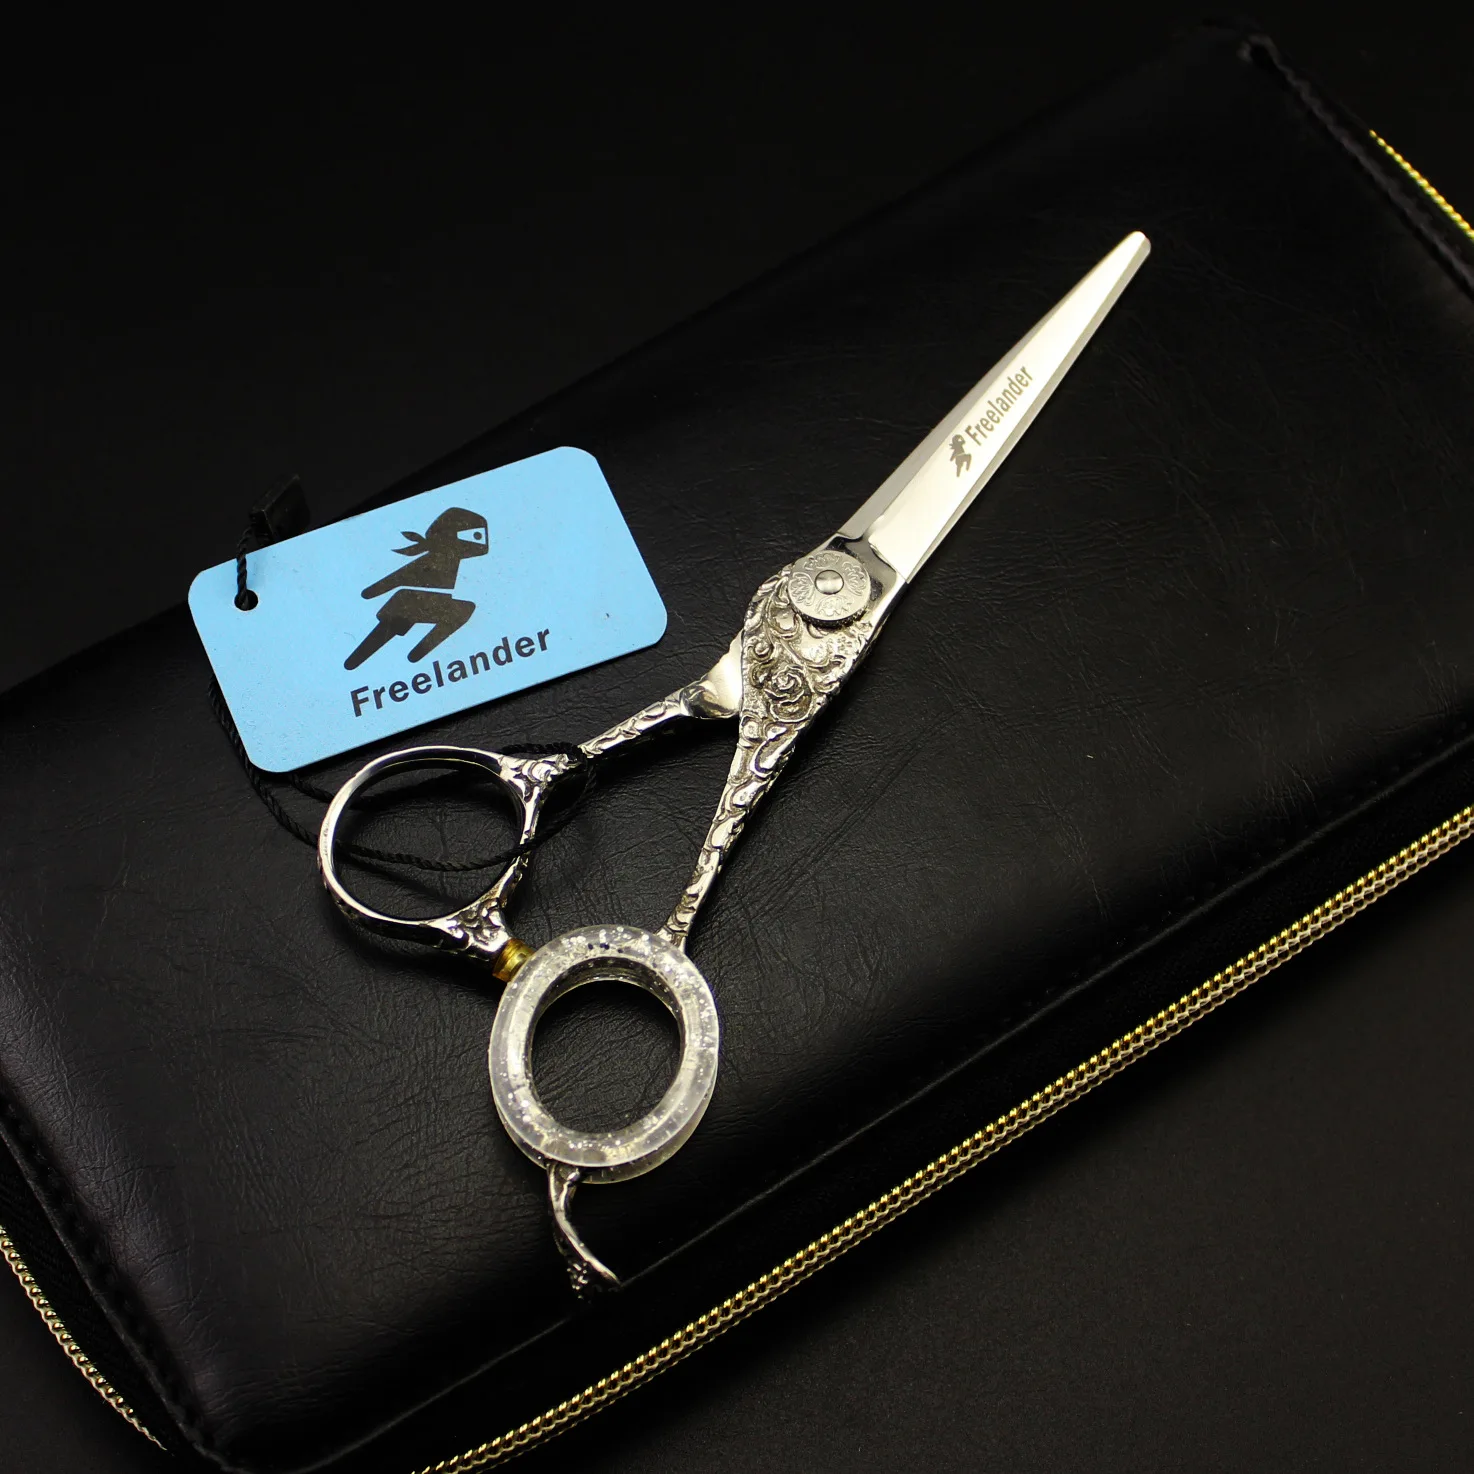 

Professional 6.0 inch 440c Freelander personalized hairdressing scissors